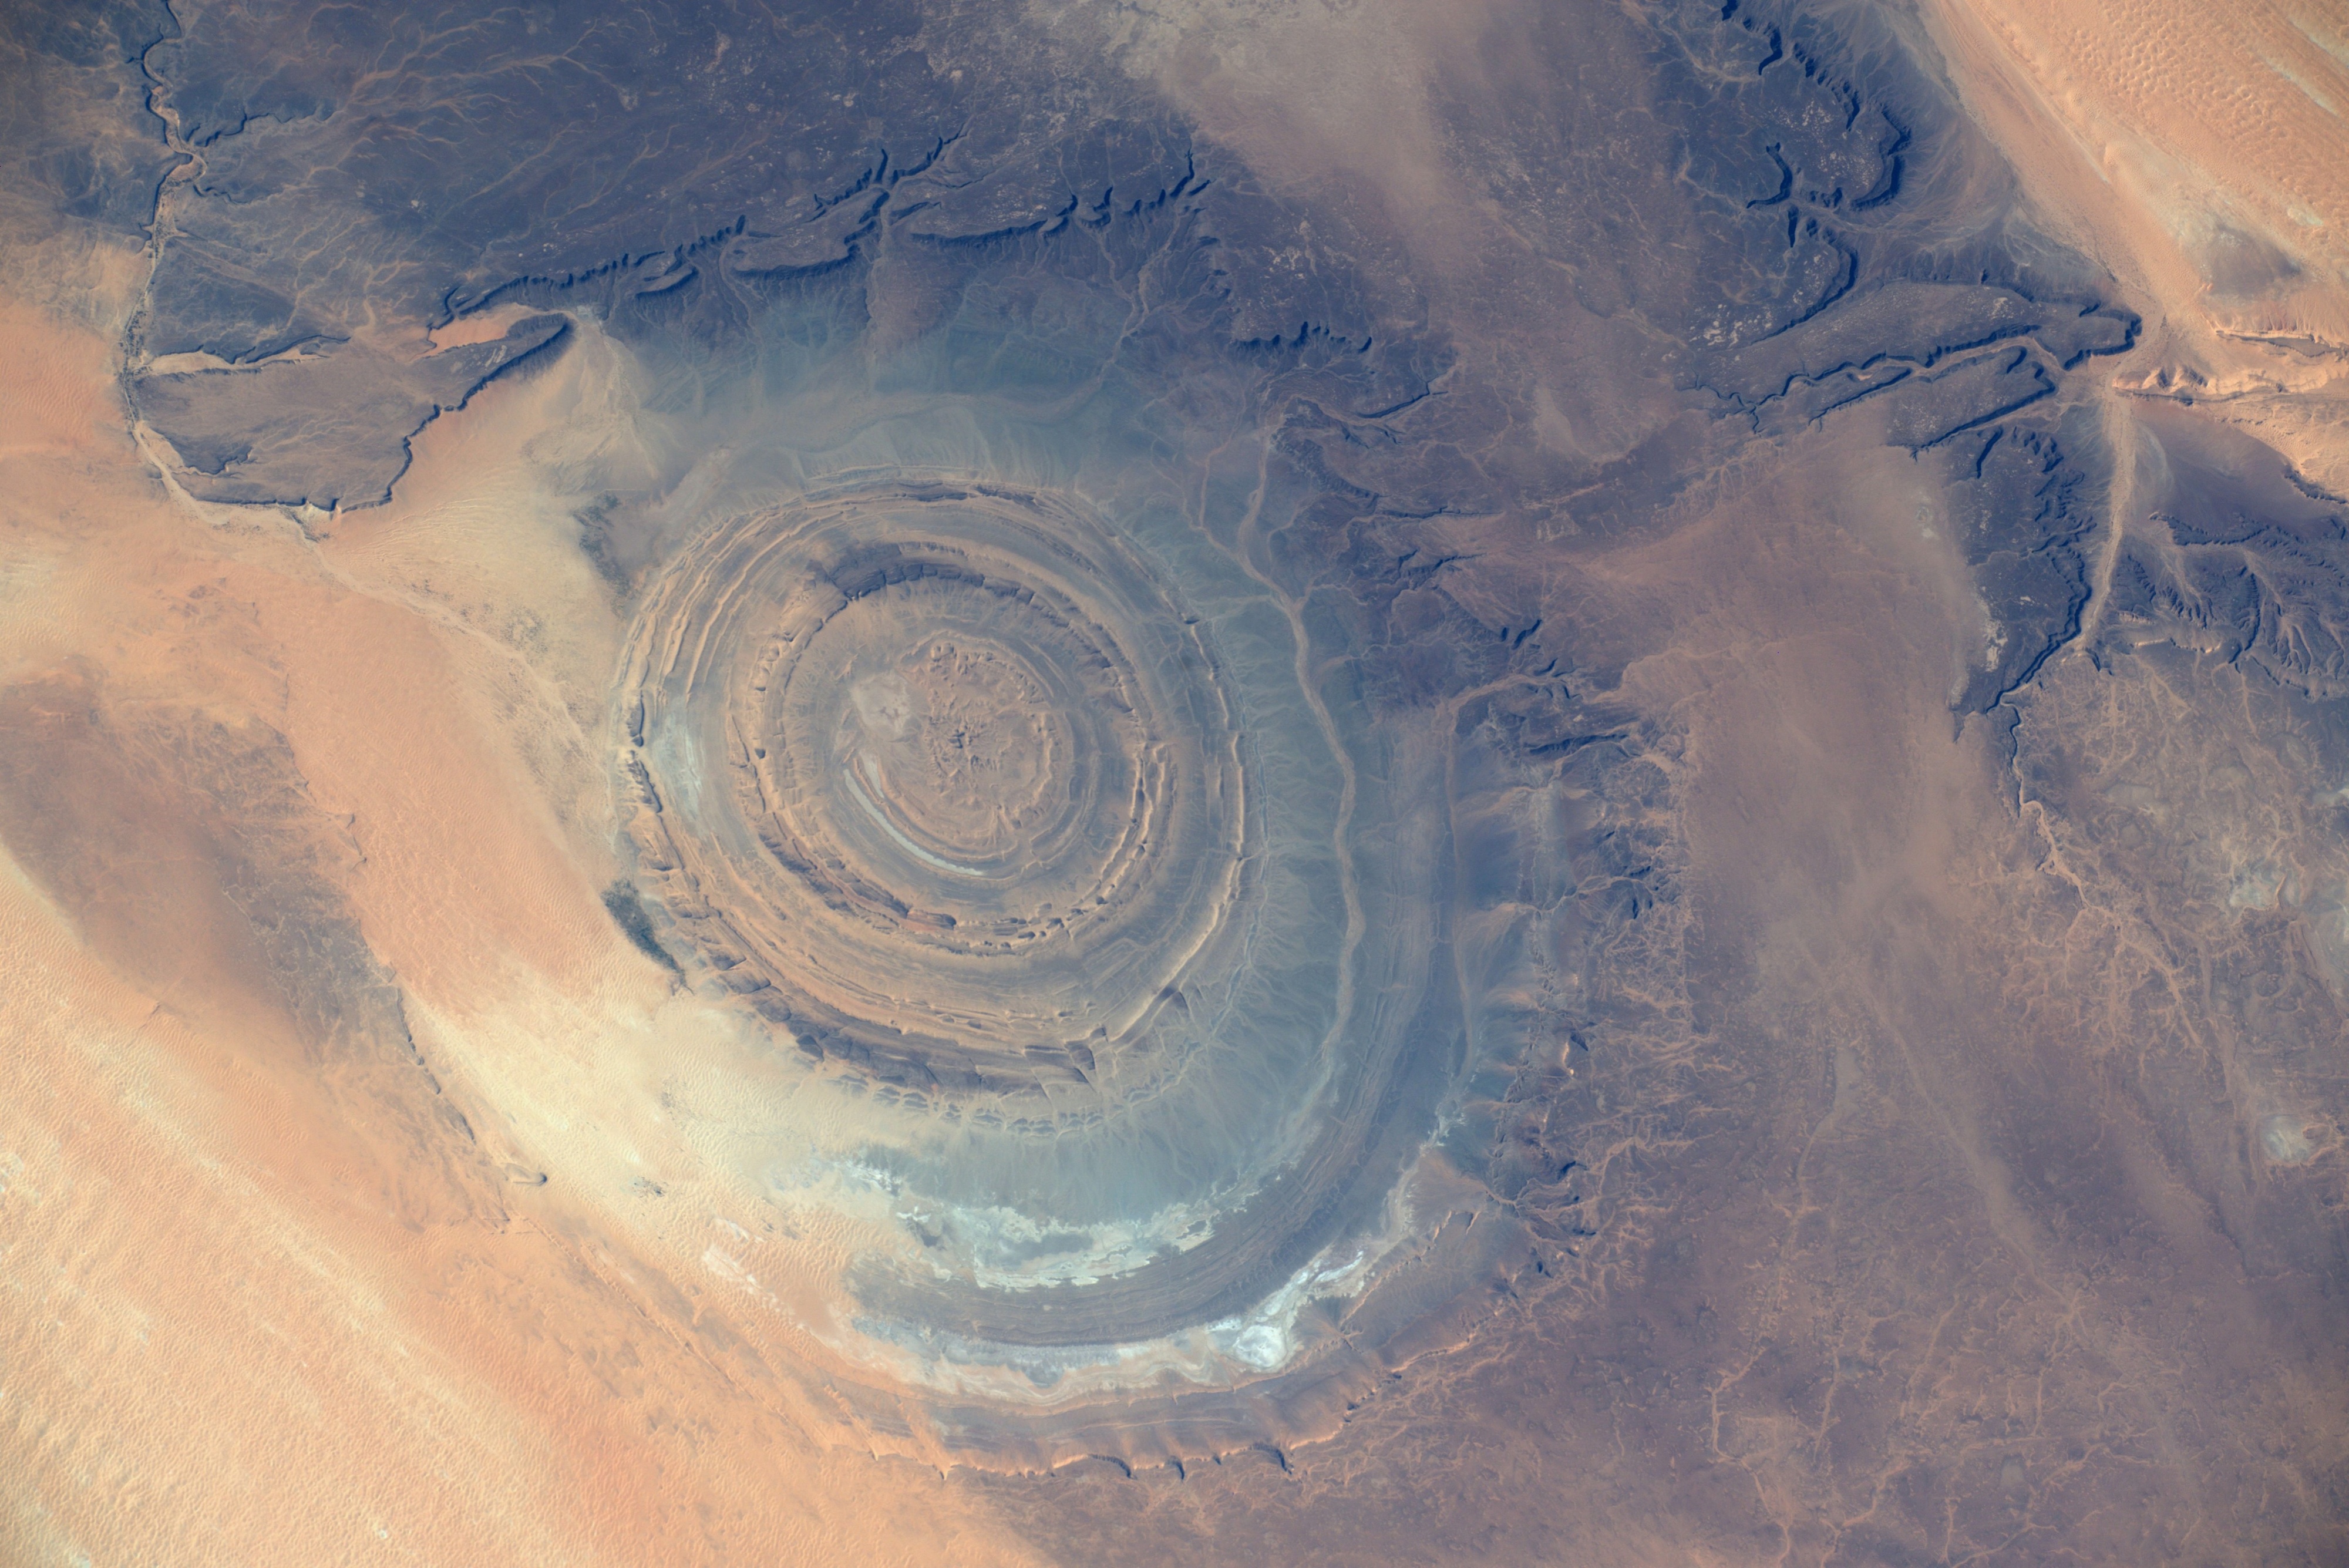 Сахара на глазок. Око Сахары Атлантида. Гуэль-Эр-ришат глаз Сахары. Глаз Сахары Атлантида. Richat structure, Mauritania.